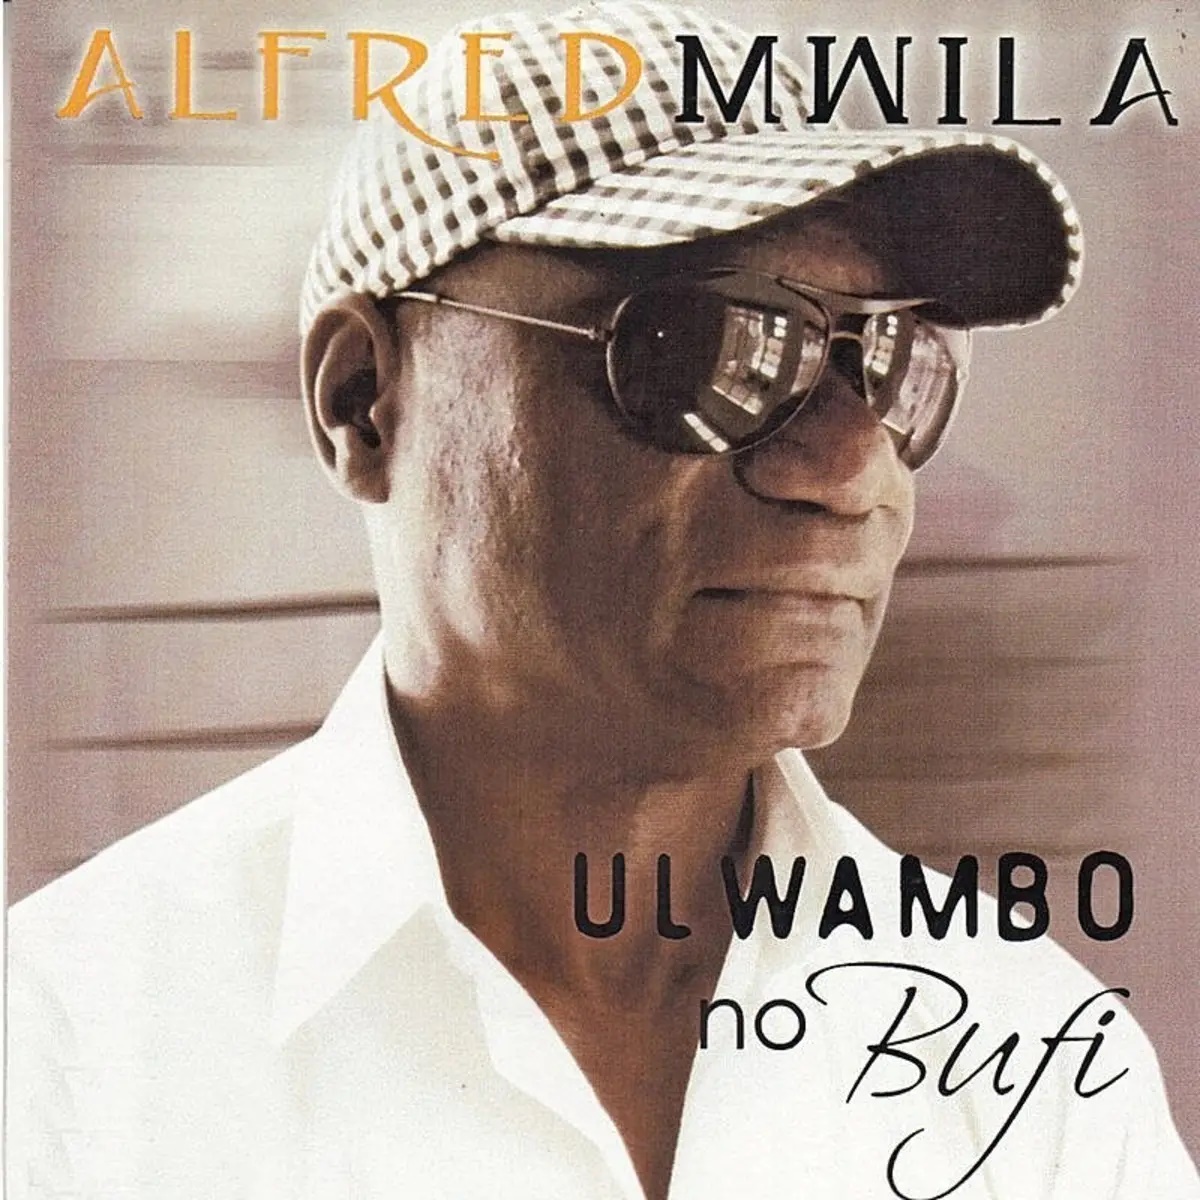 Ulwambo No Bufi by Alfred Mwila | Album